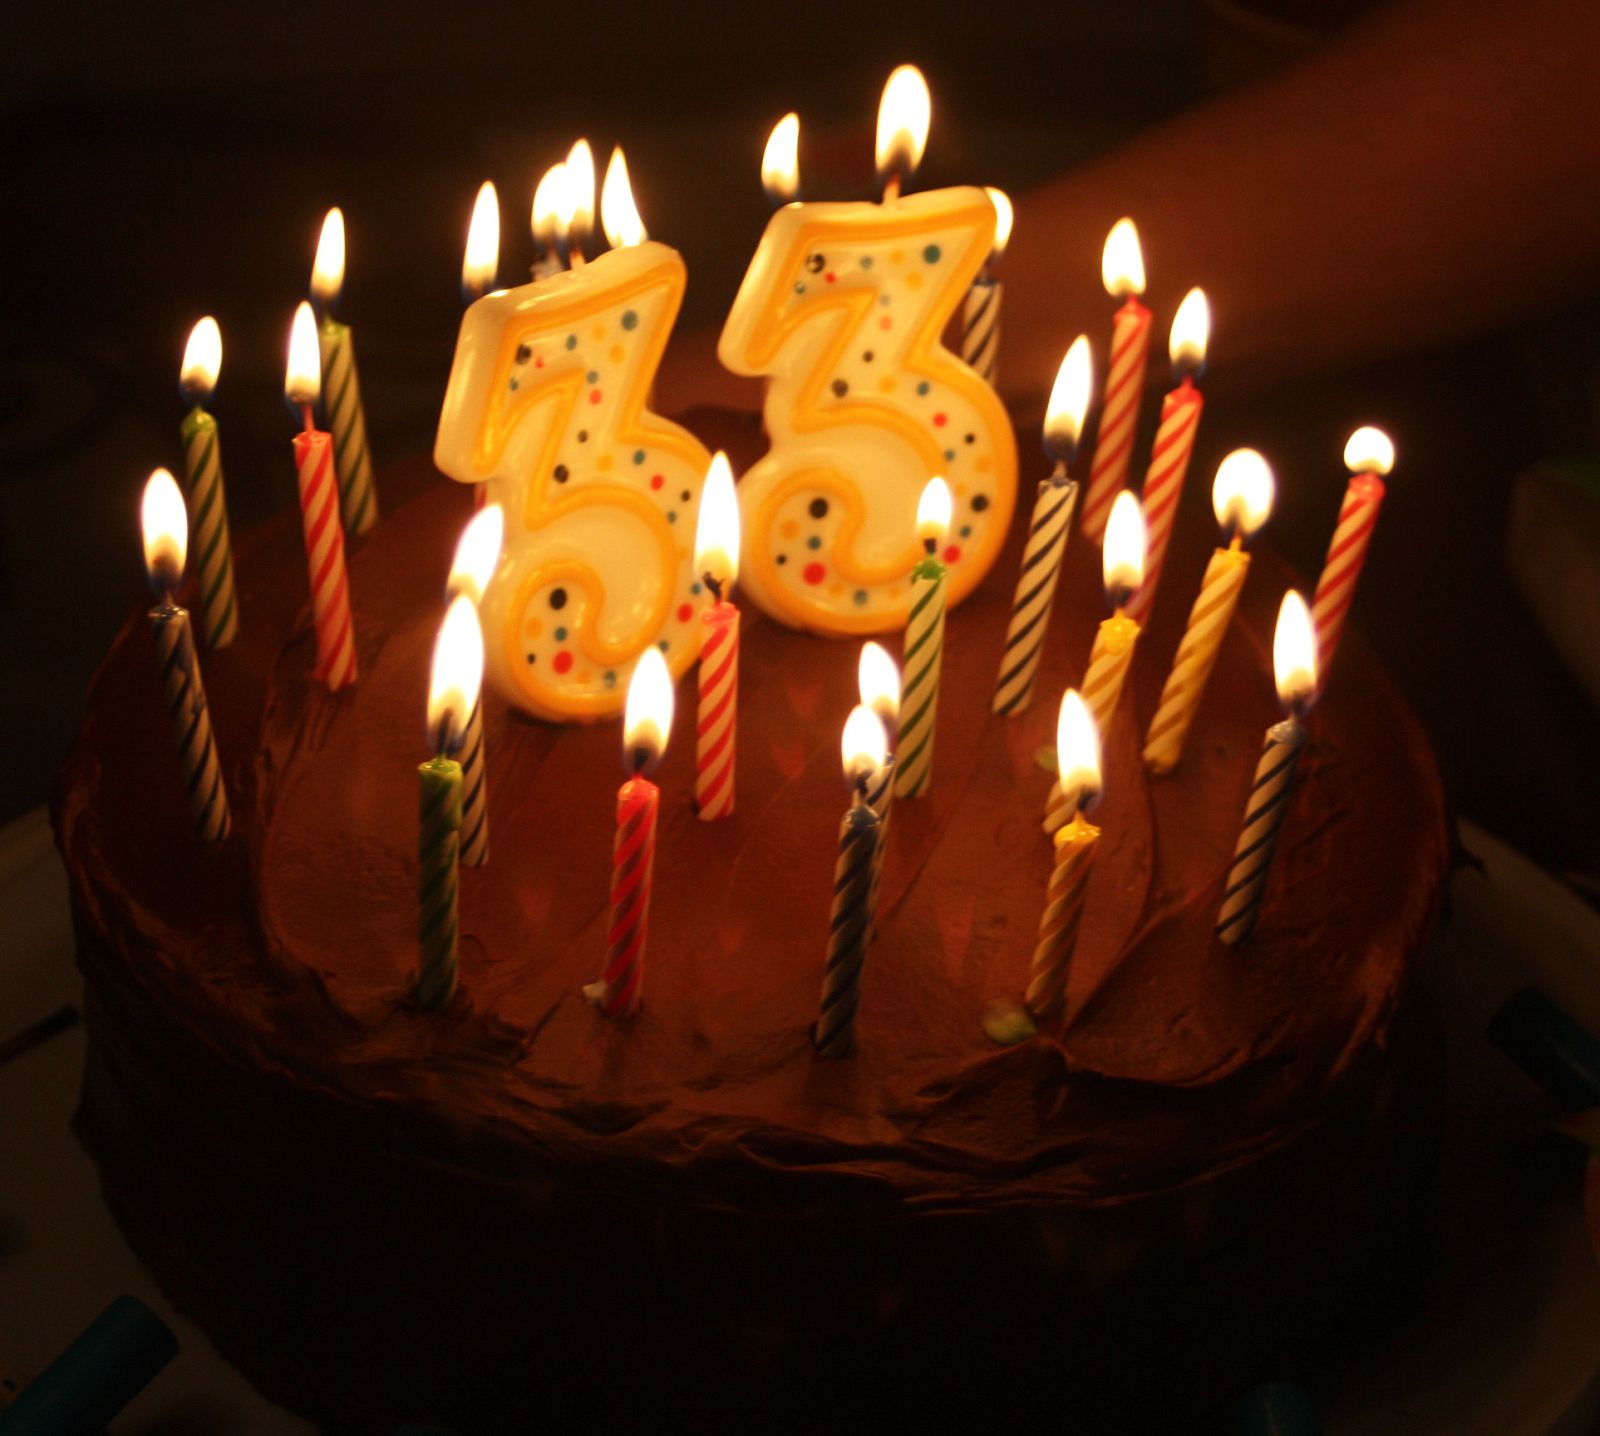 happy-33rd-birthday-cake-611.jpg